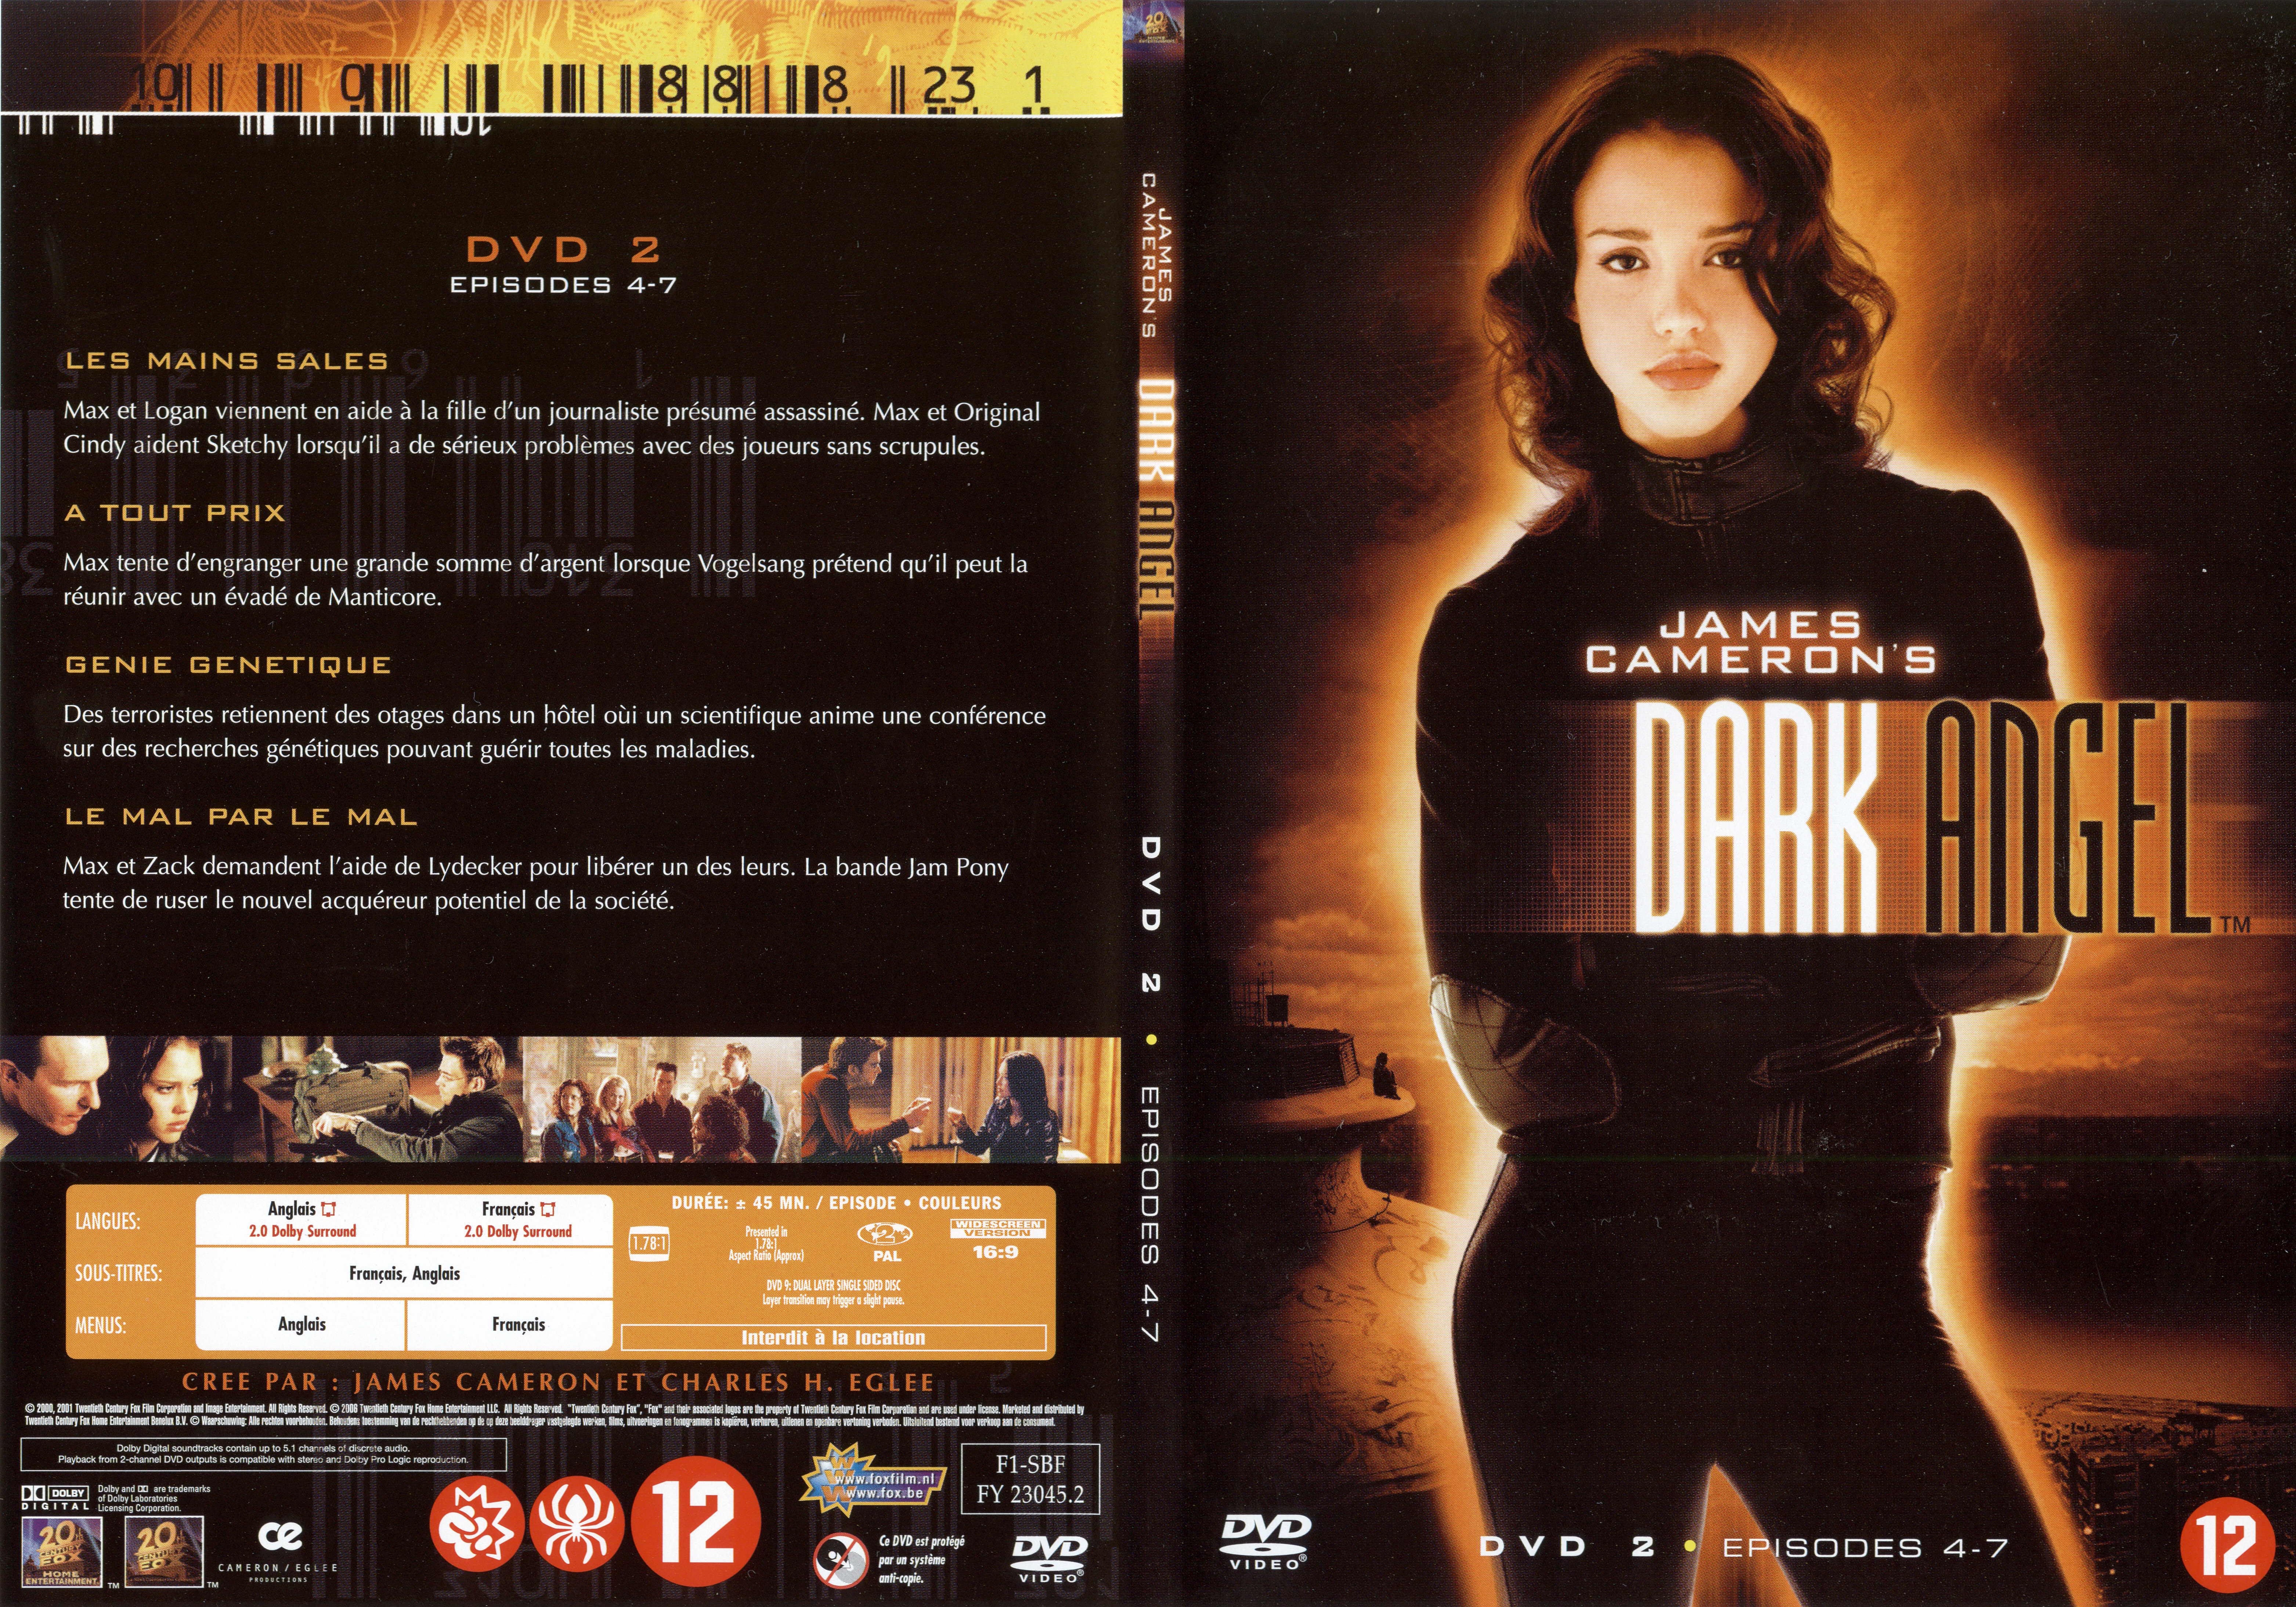 Jaquette DVD Dark Angel Saison 1 DVD 2 v2